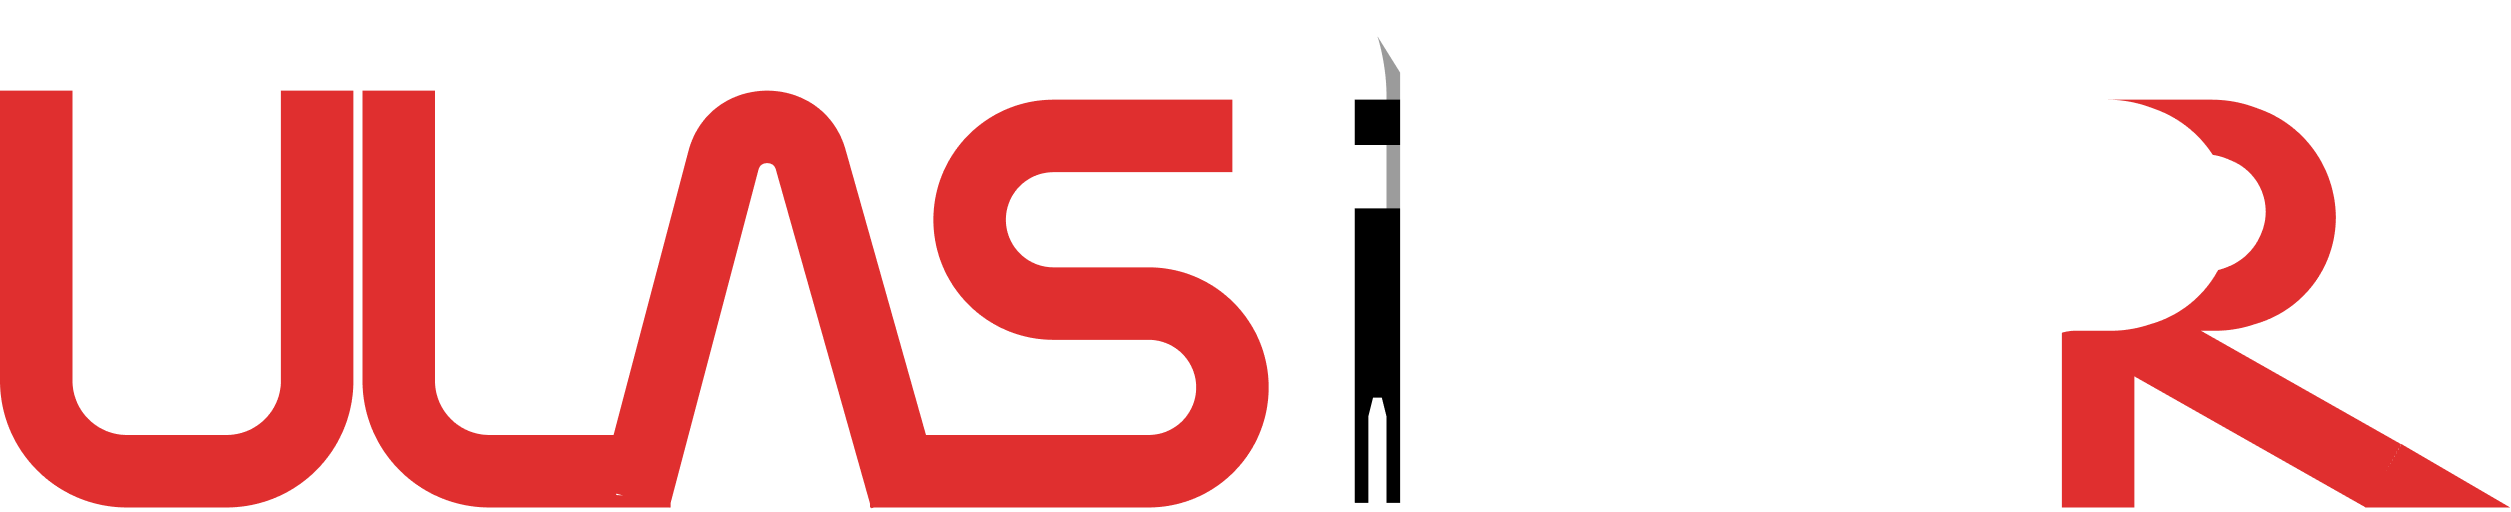 ULAS HiPR Logo